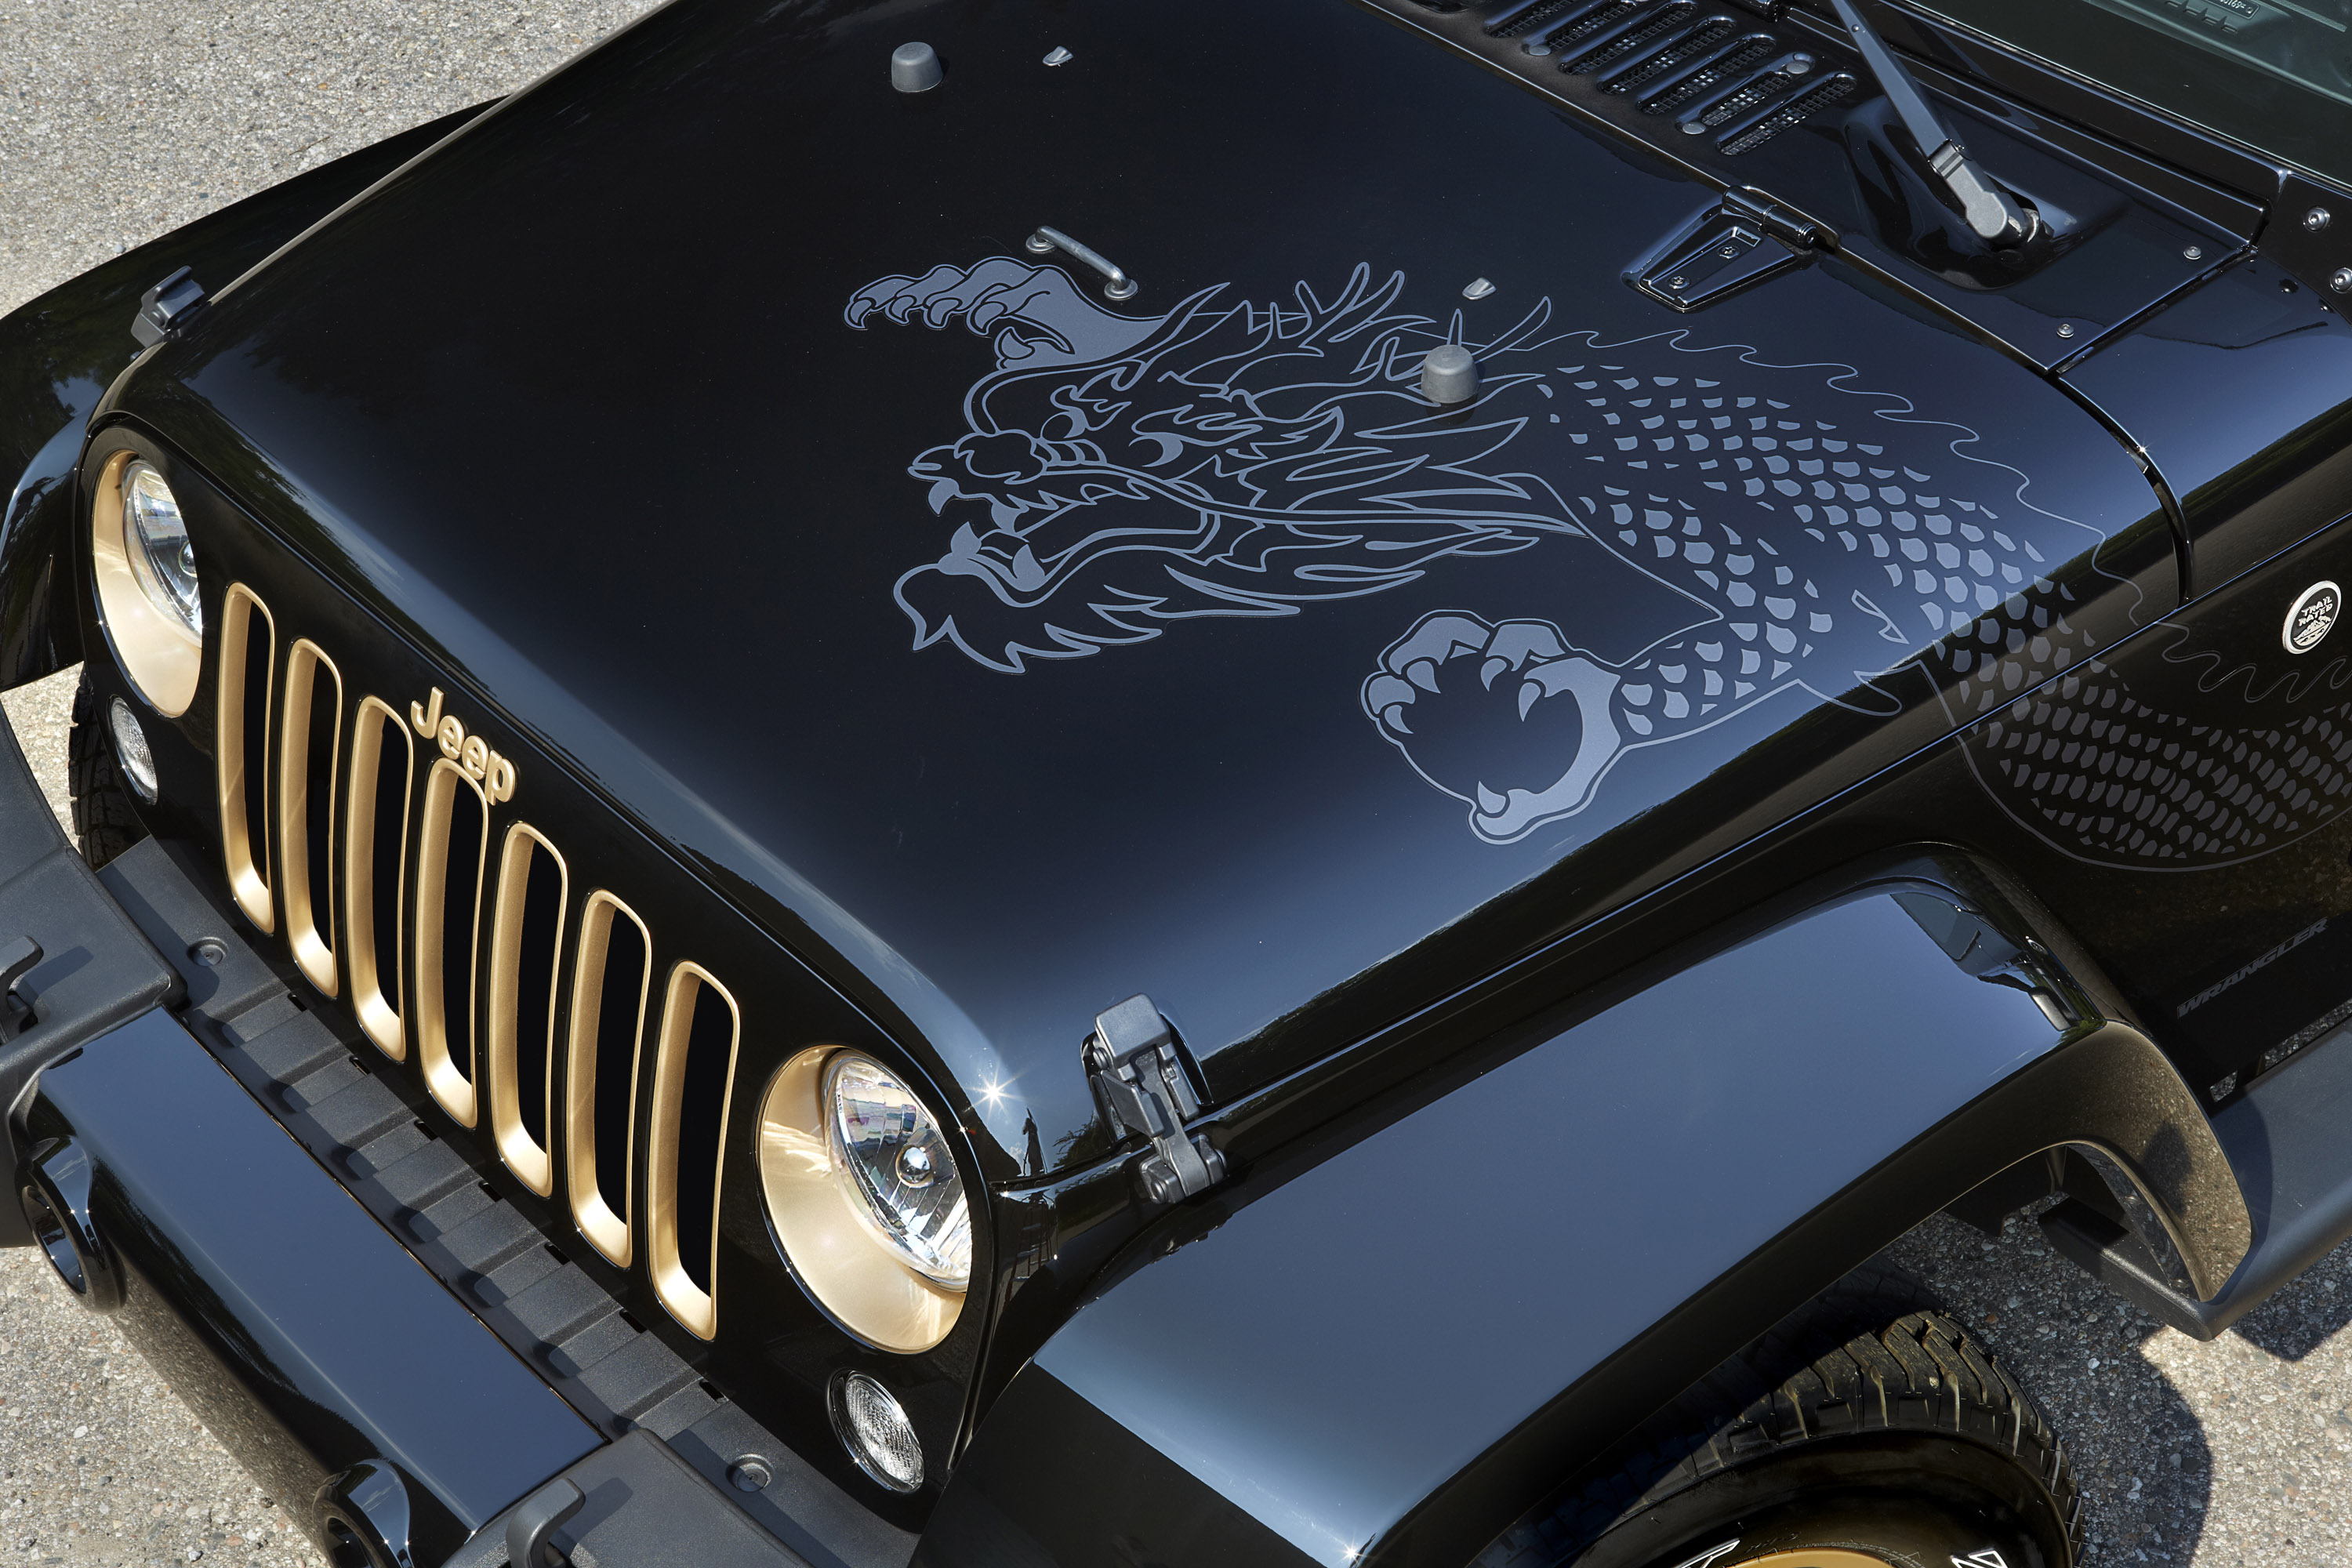 2014 Jeep Wrangler Dragon Edition - US Price $36,095